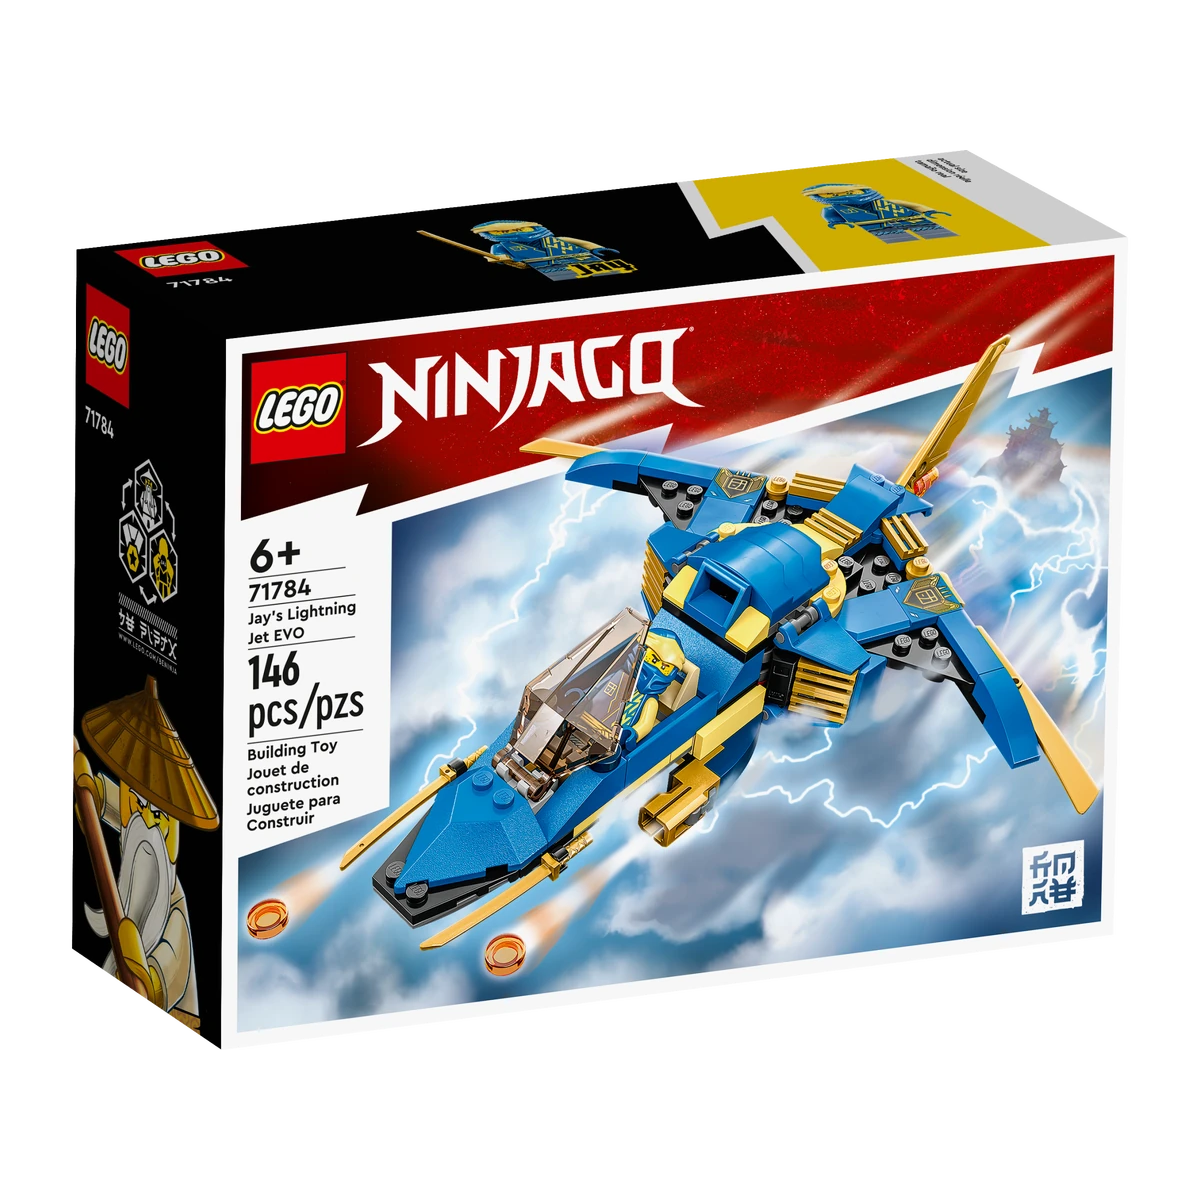 Lego Ninjago Jay’s Lightning Jet Evo